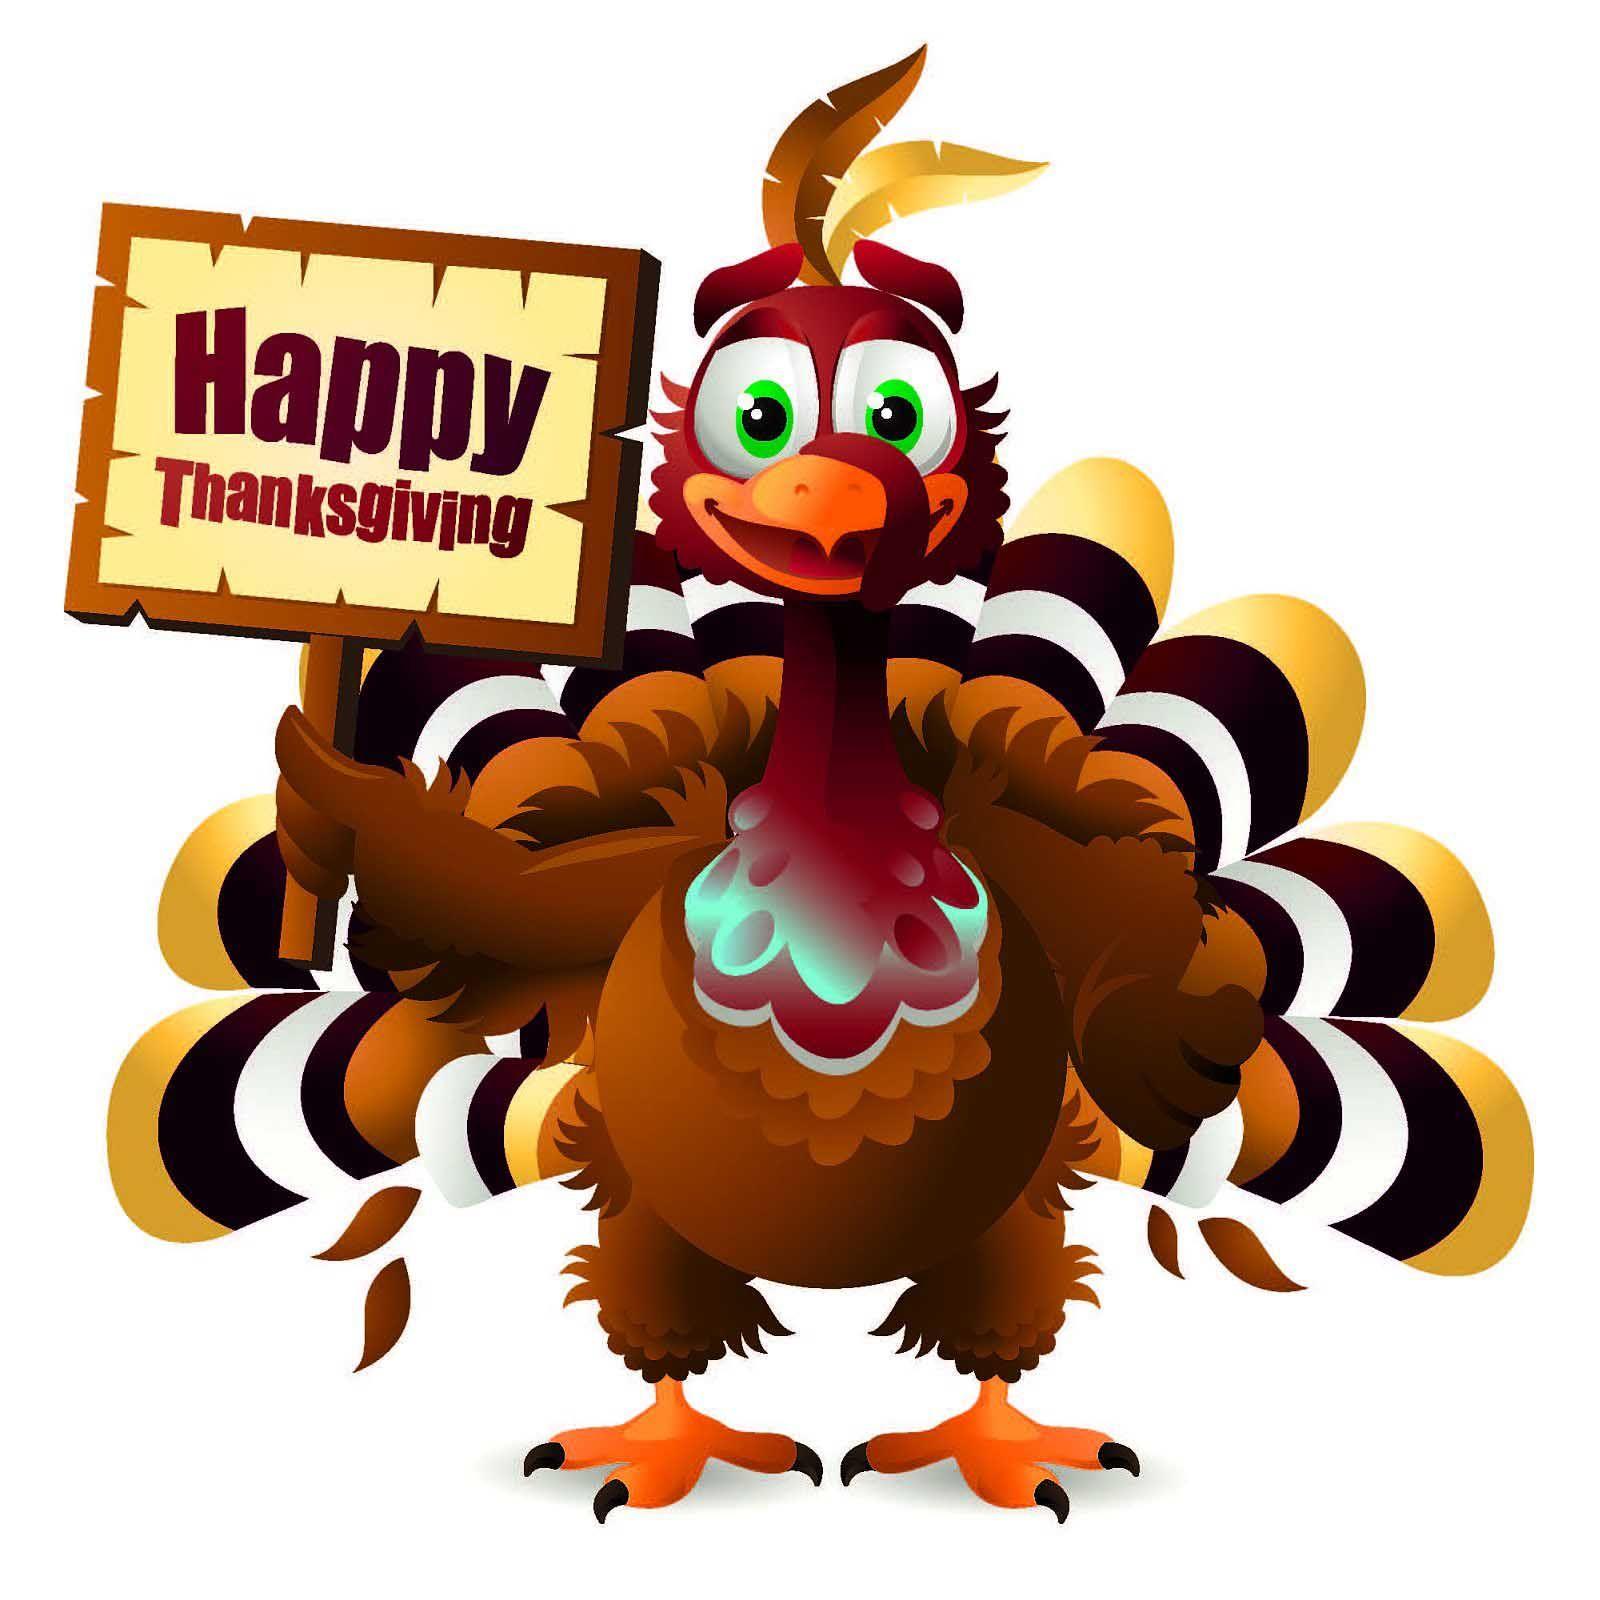 Yummy Thanksgiving Turkey Wallpaper for Desktop. Pics and GIF